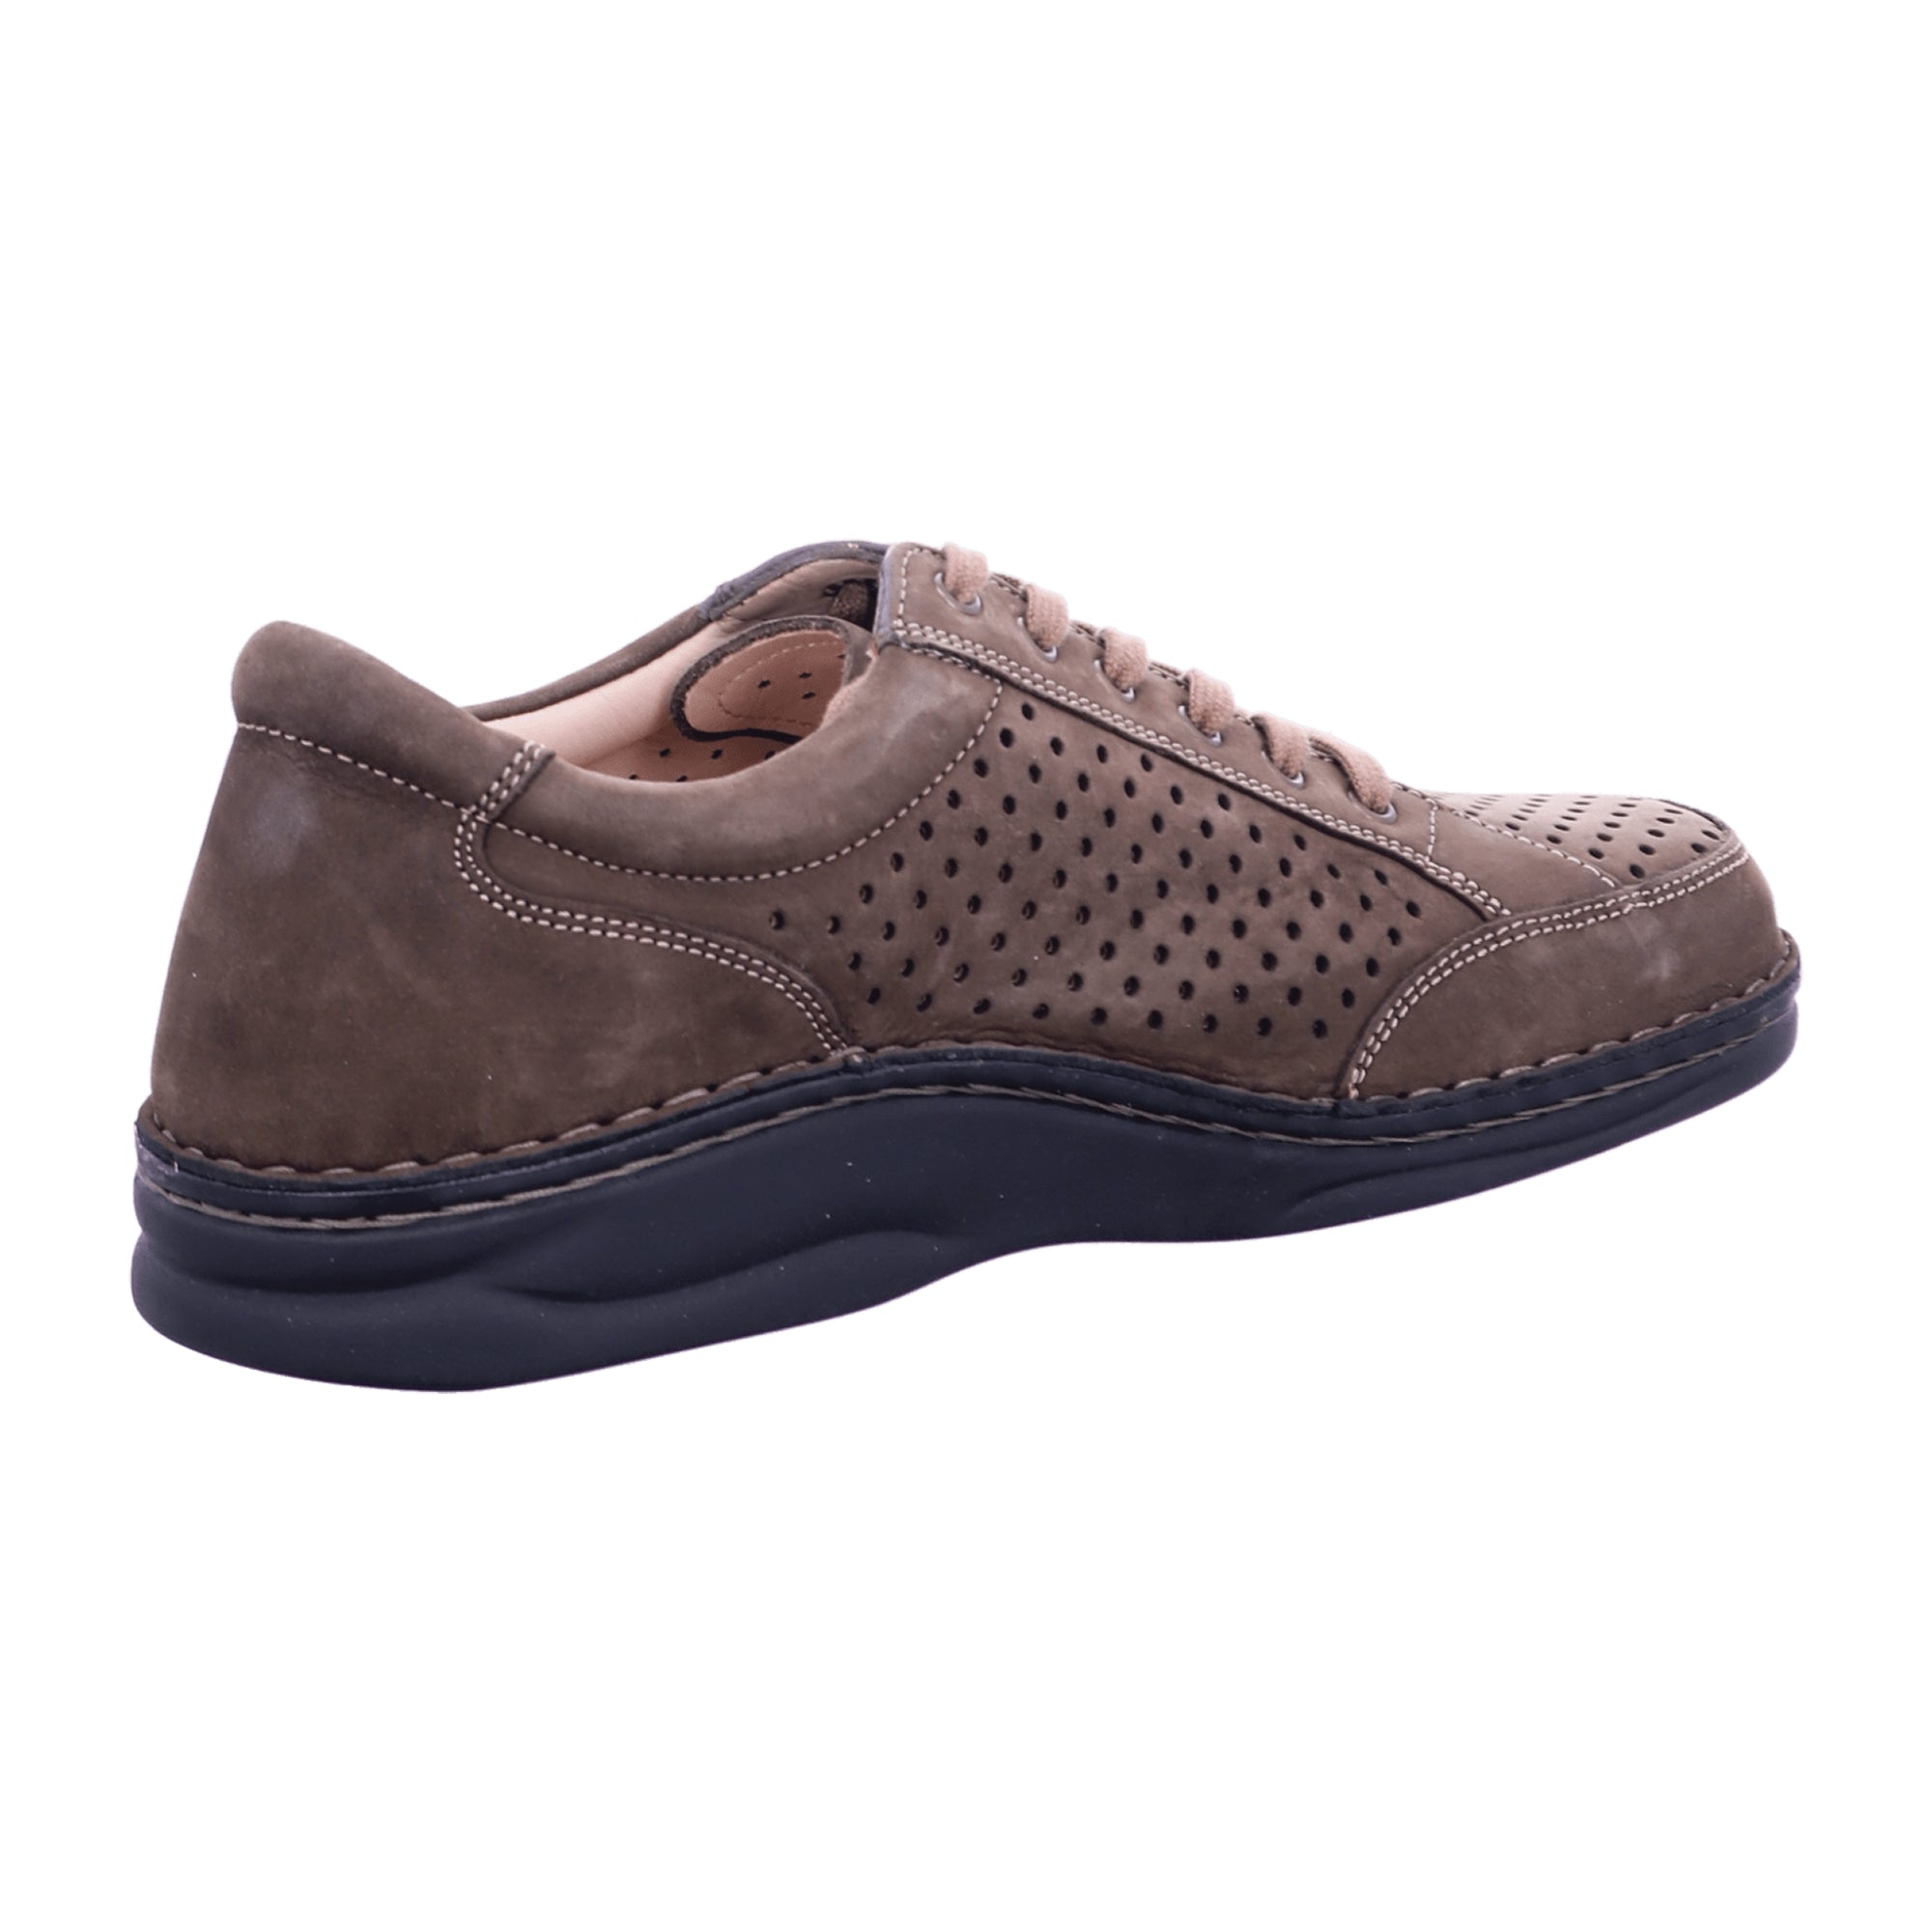 Finn Comfort Bardolino Men's Comfort Shoes, Stylish Brown Leather